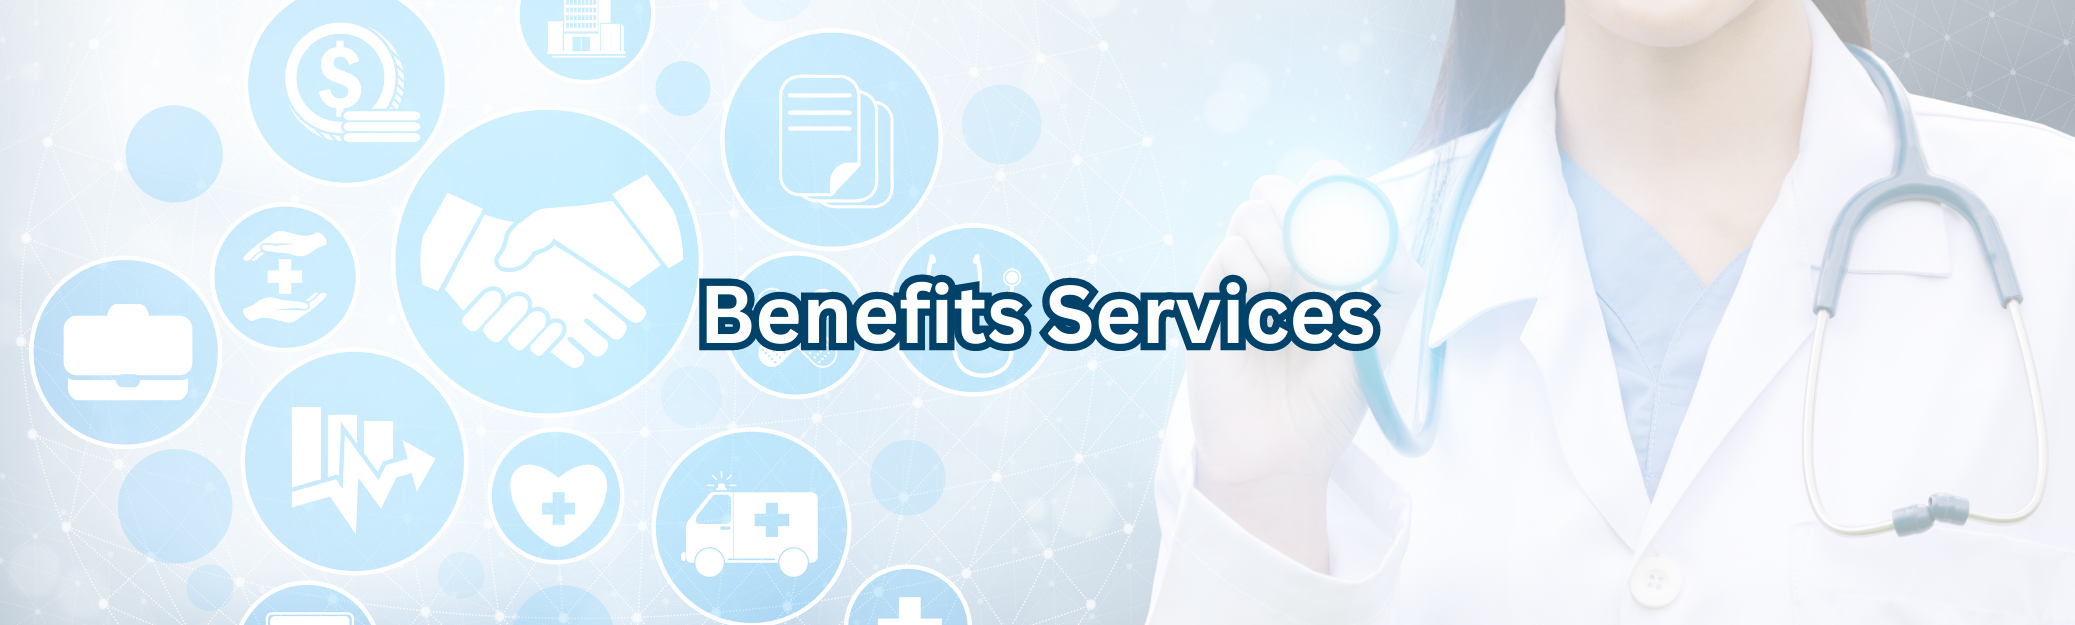 benefits services banner